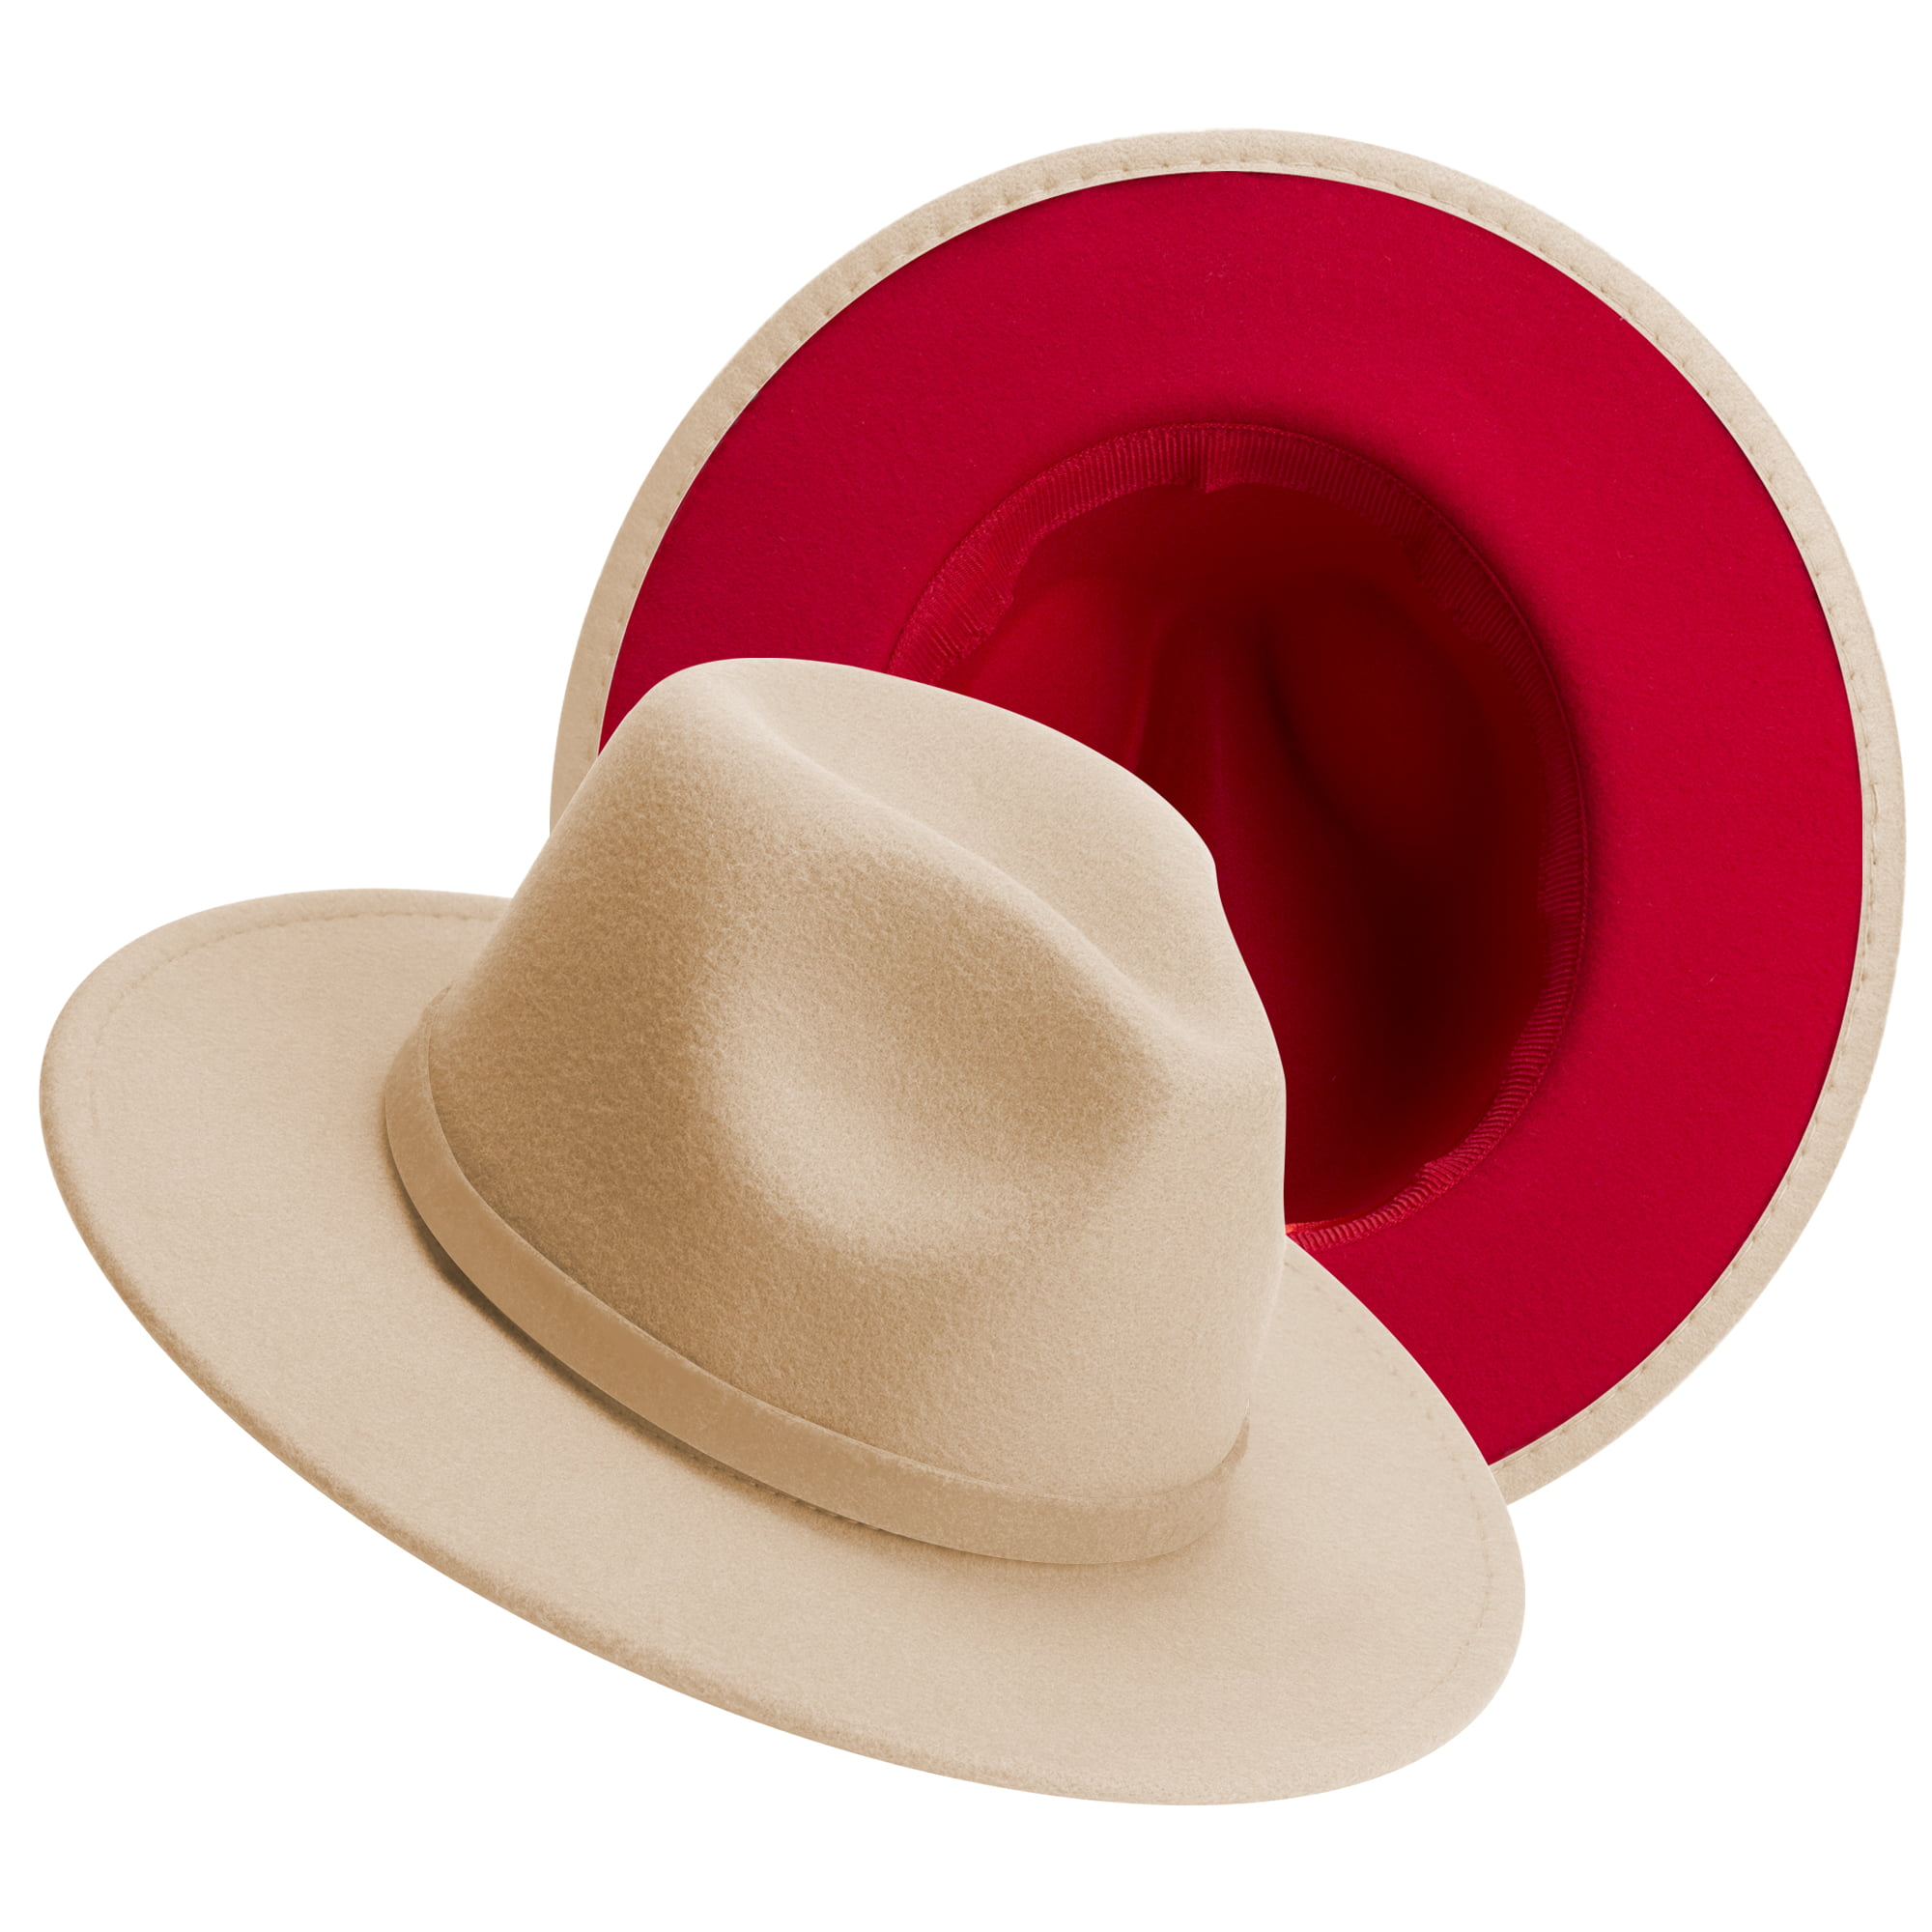 Two Tone Wide Brim Fedora Hats Classic Felt Panama Hat with Belt Buckle for Women & Men 